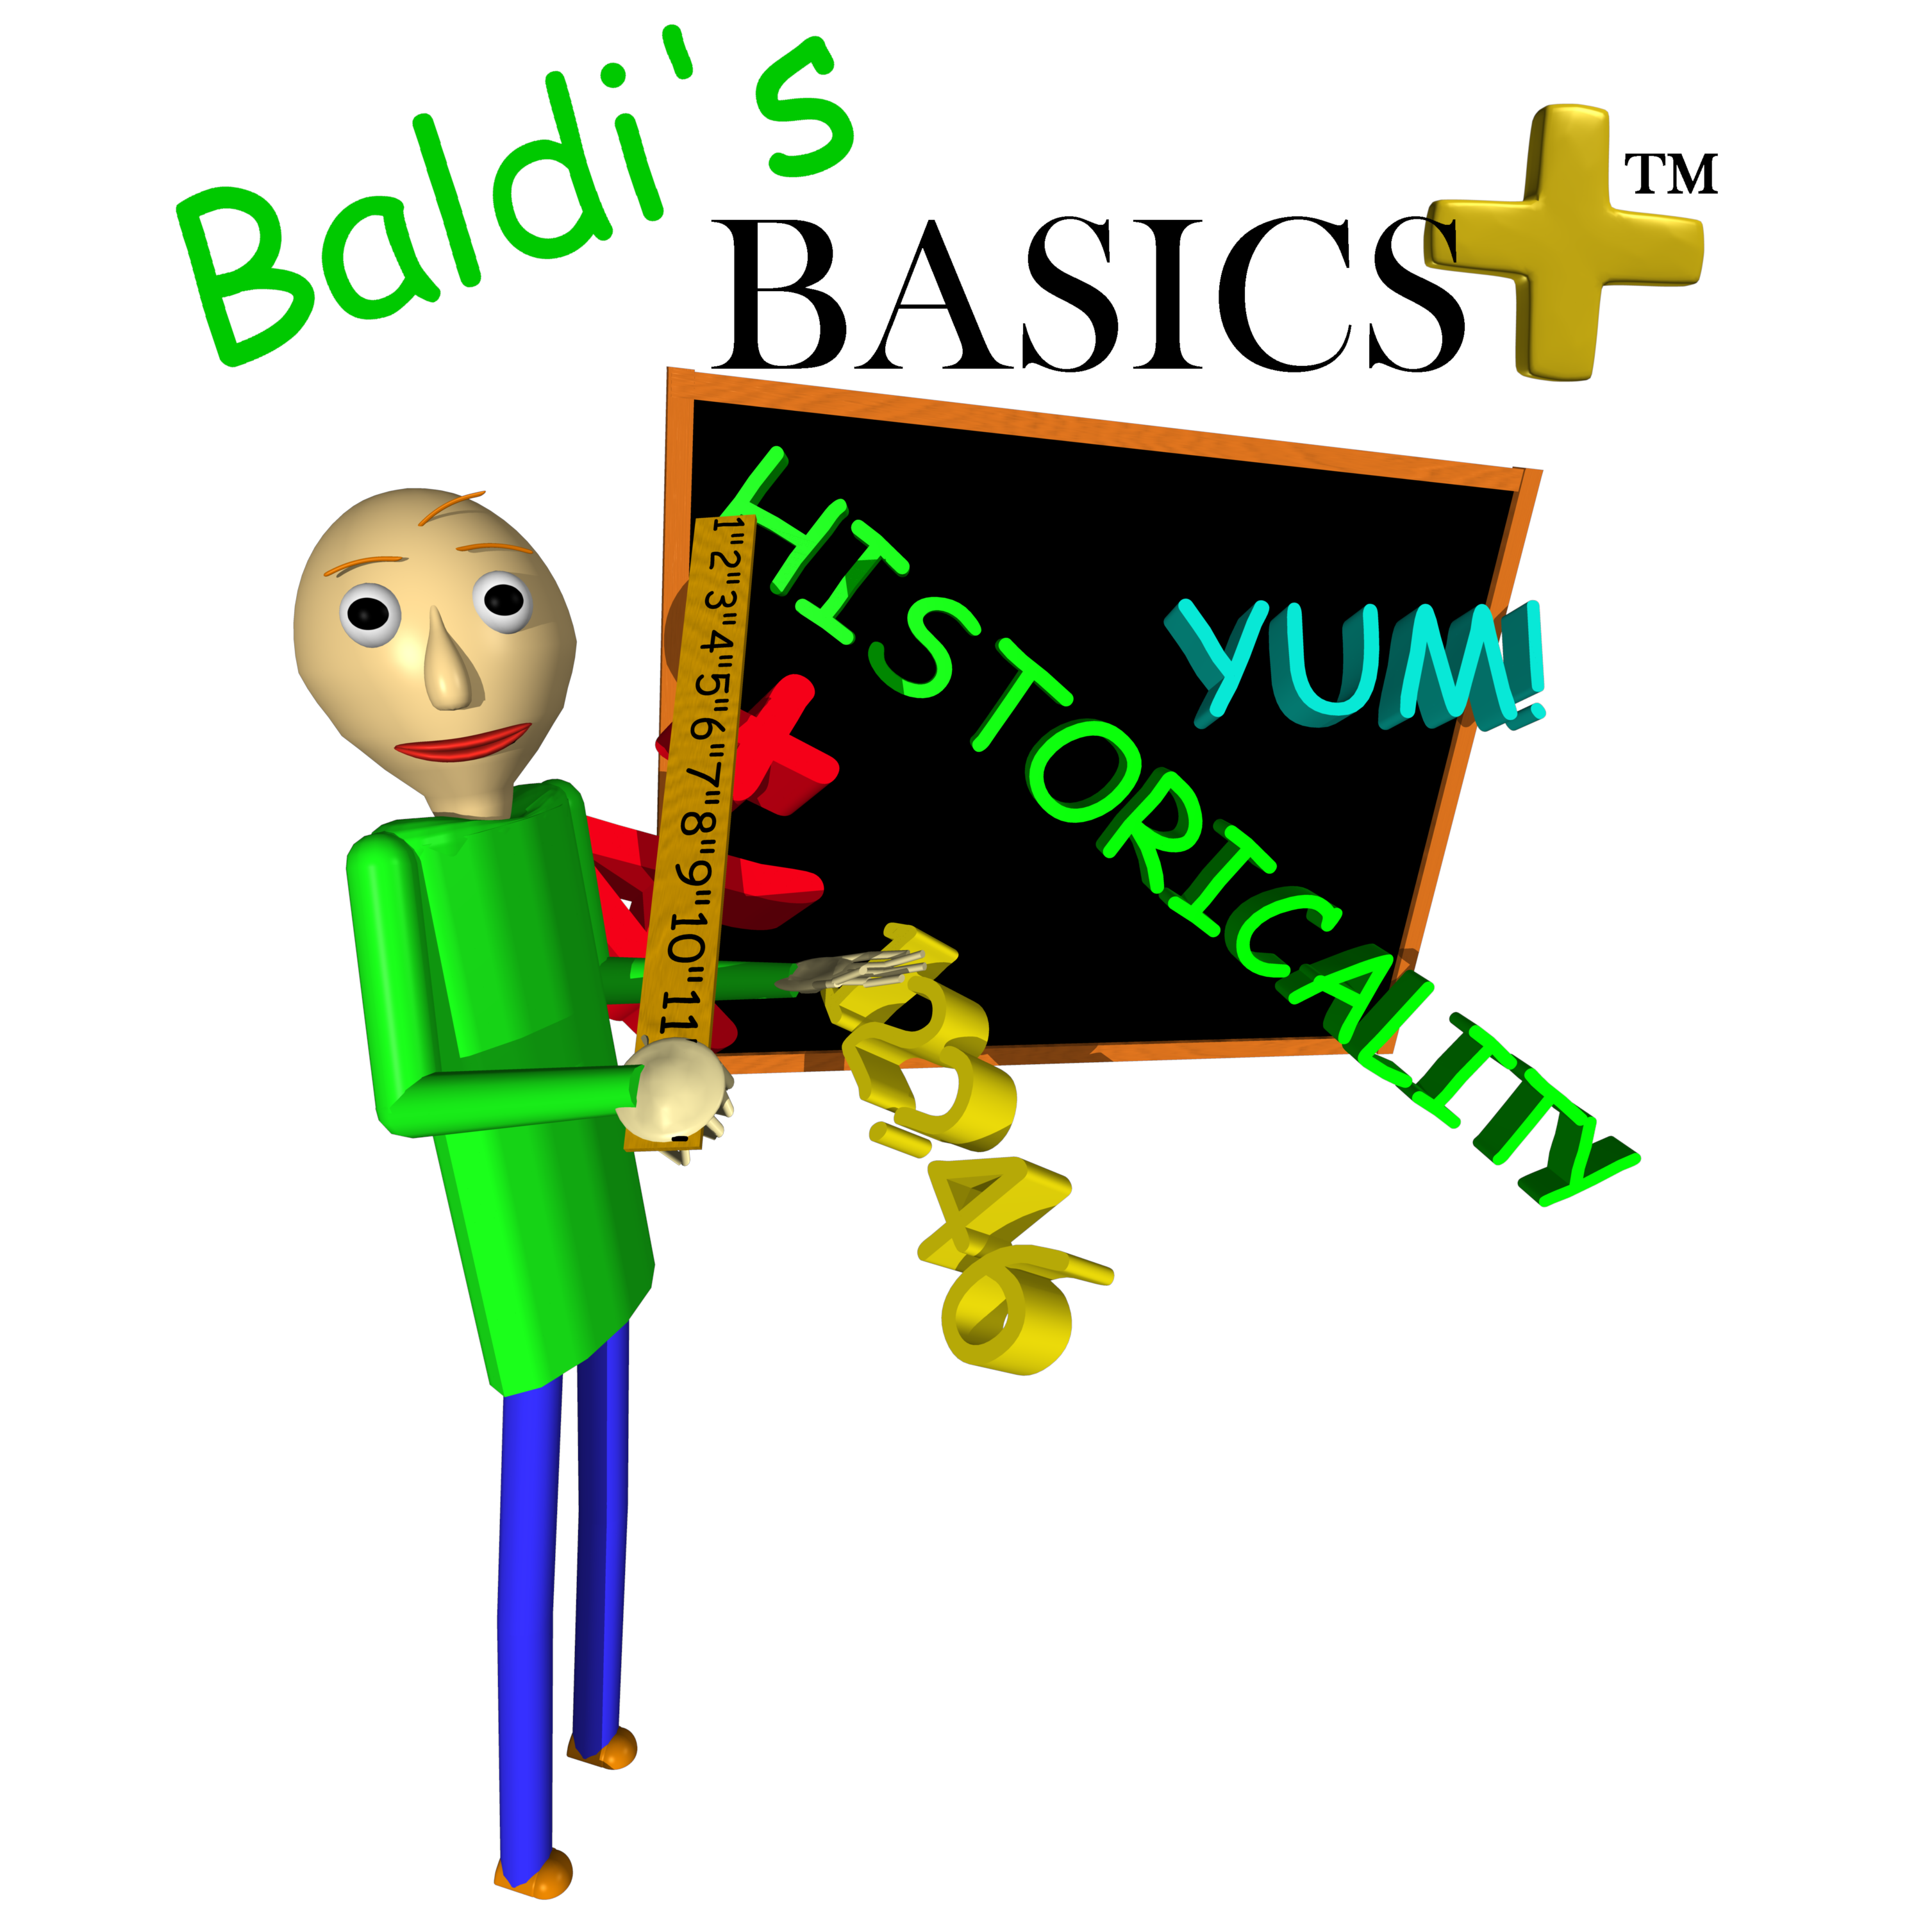 Baldi's Basics' Brings Nostalgia for Millennial Gamers